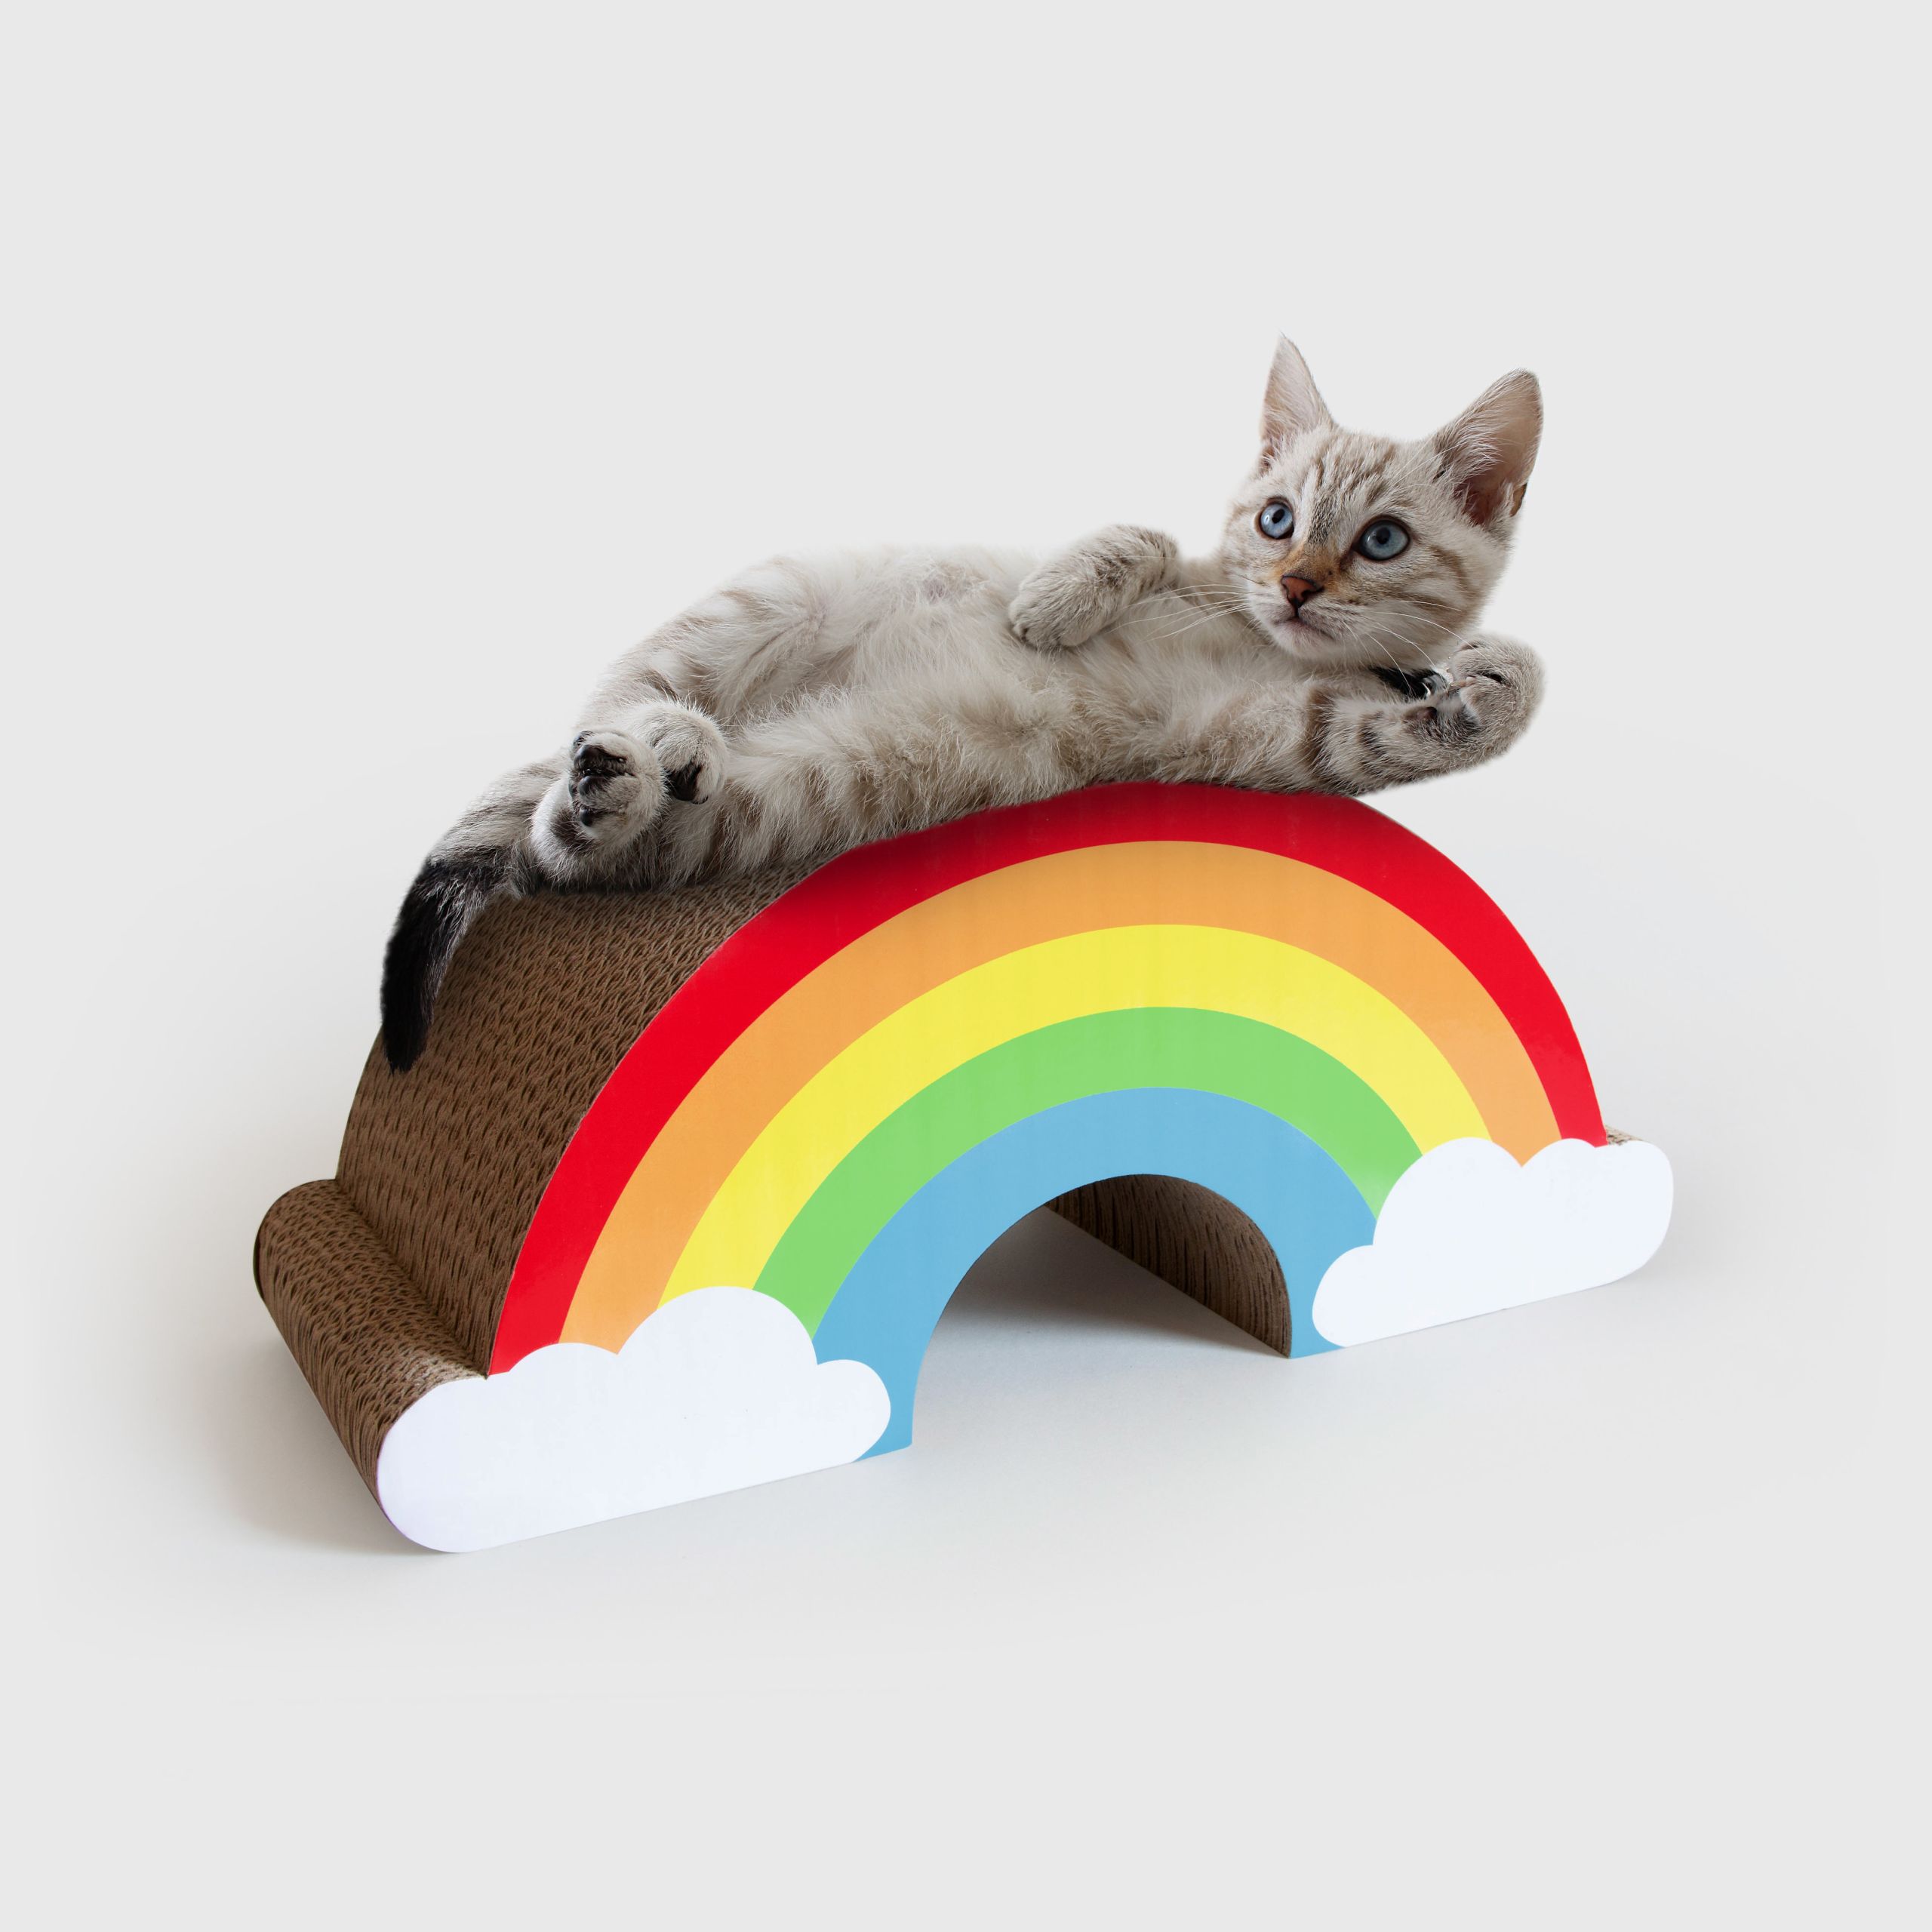 Rainbow cat scratcher